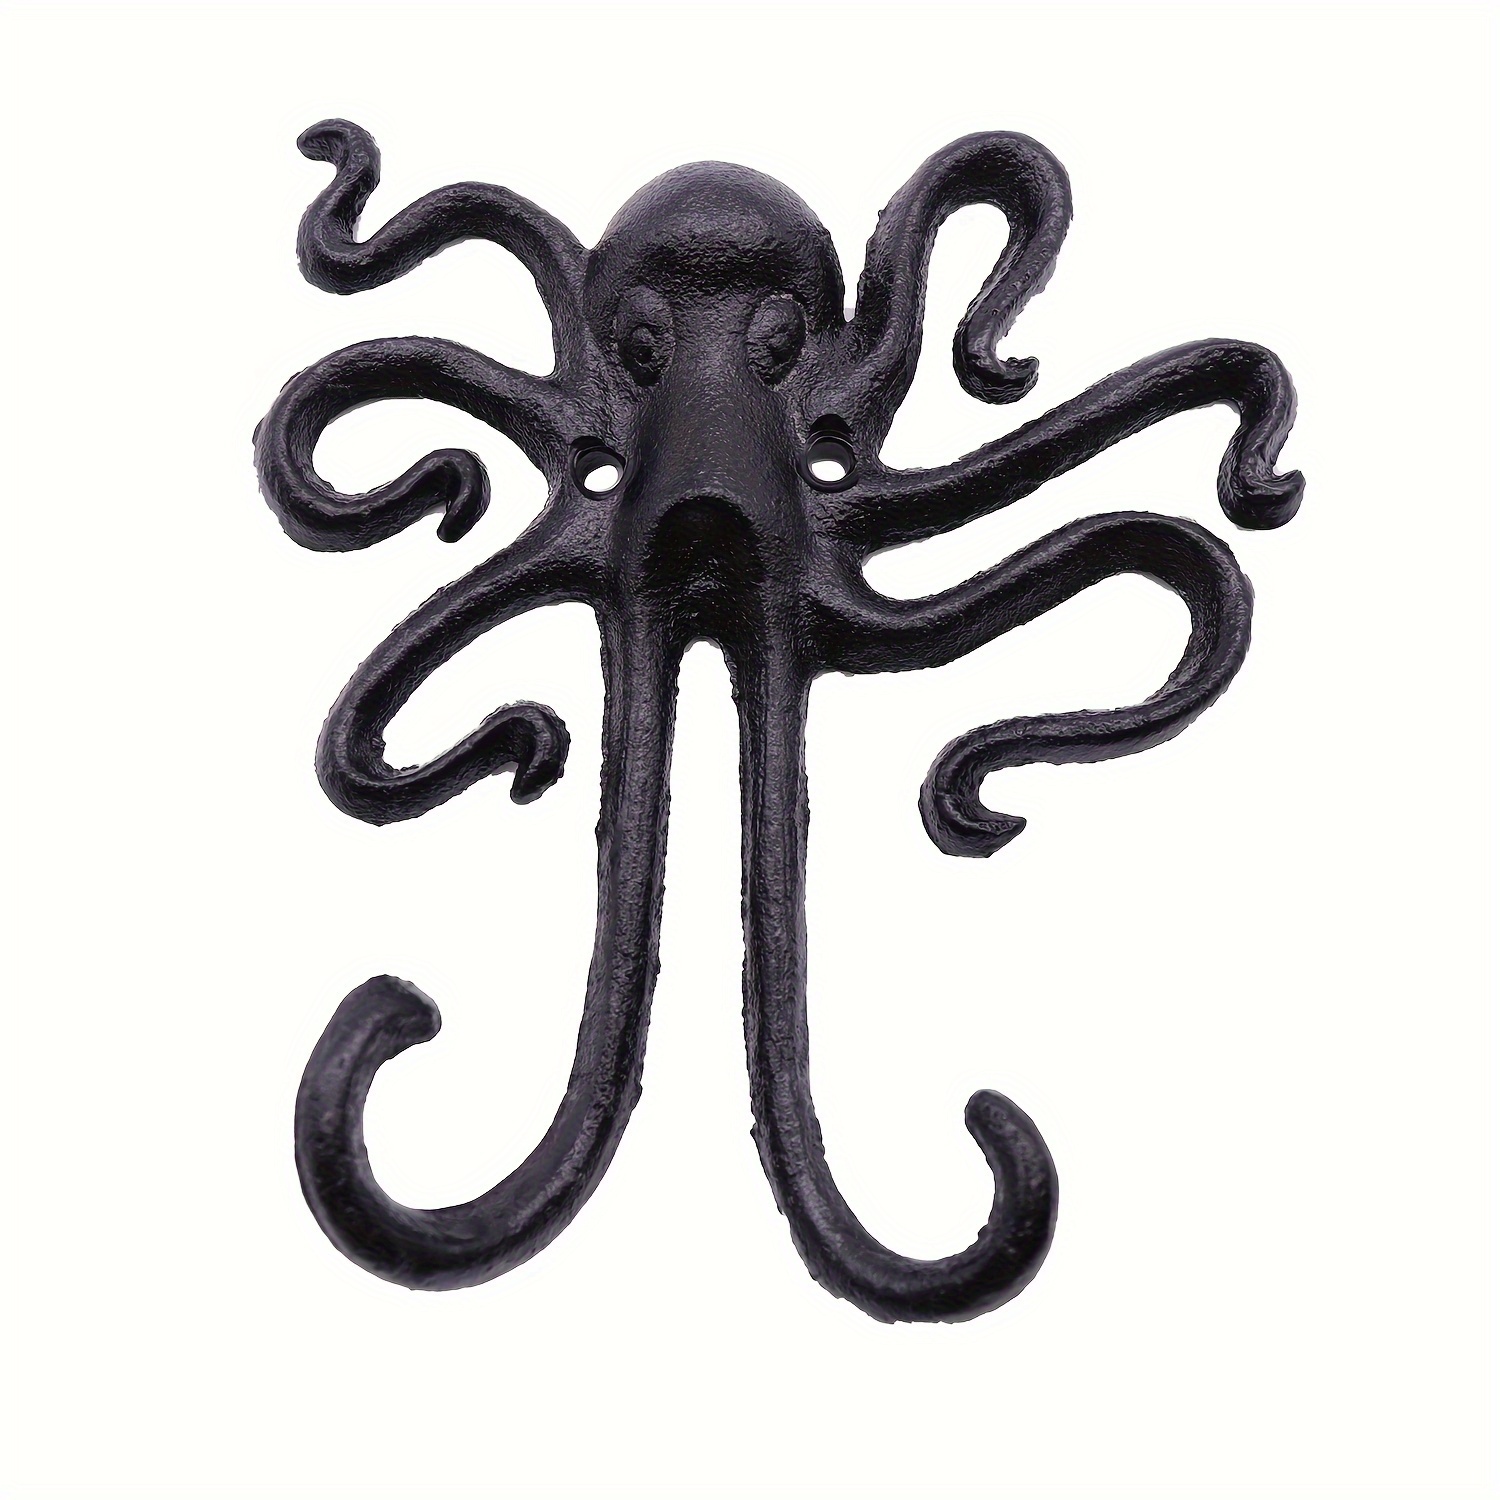 2PCS Heavy Duty Decorative Octopus Hook- Wall Mounted Coat Hooks/Solid Cast  Iron Unique Key Holders/Home Decor (Black)